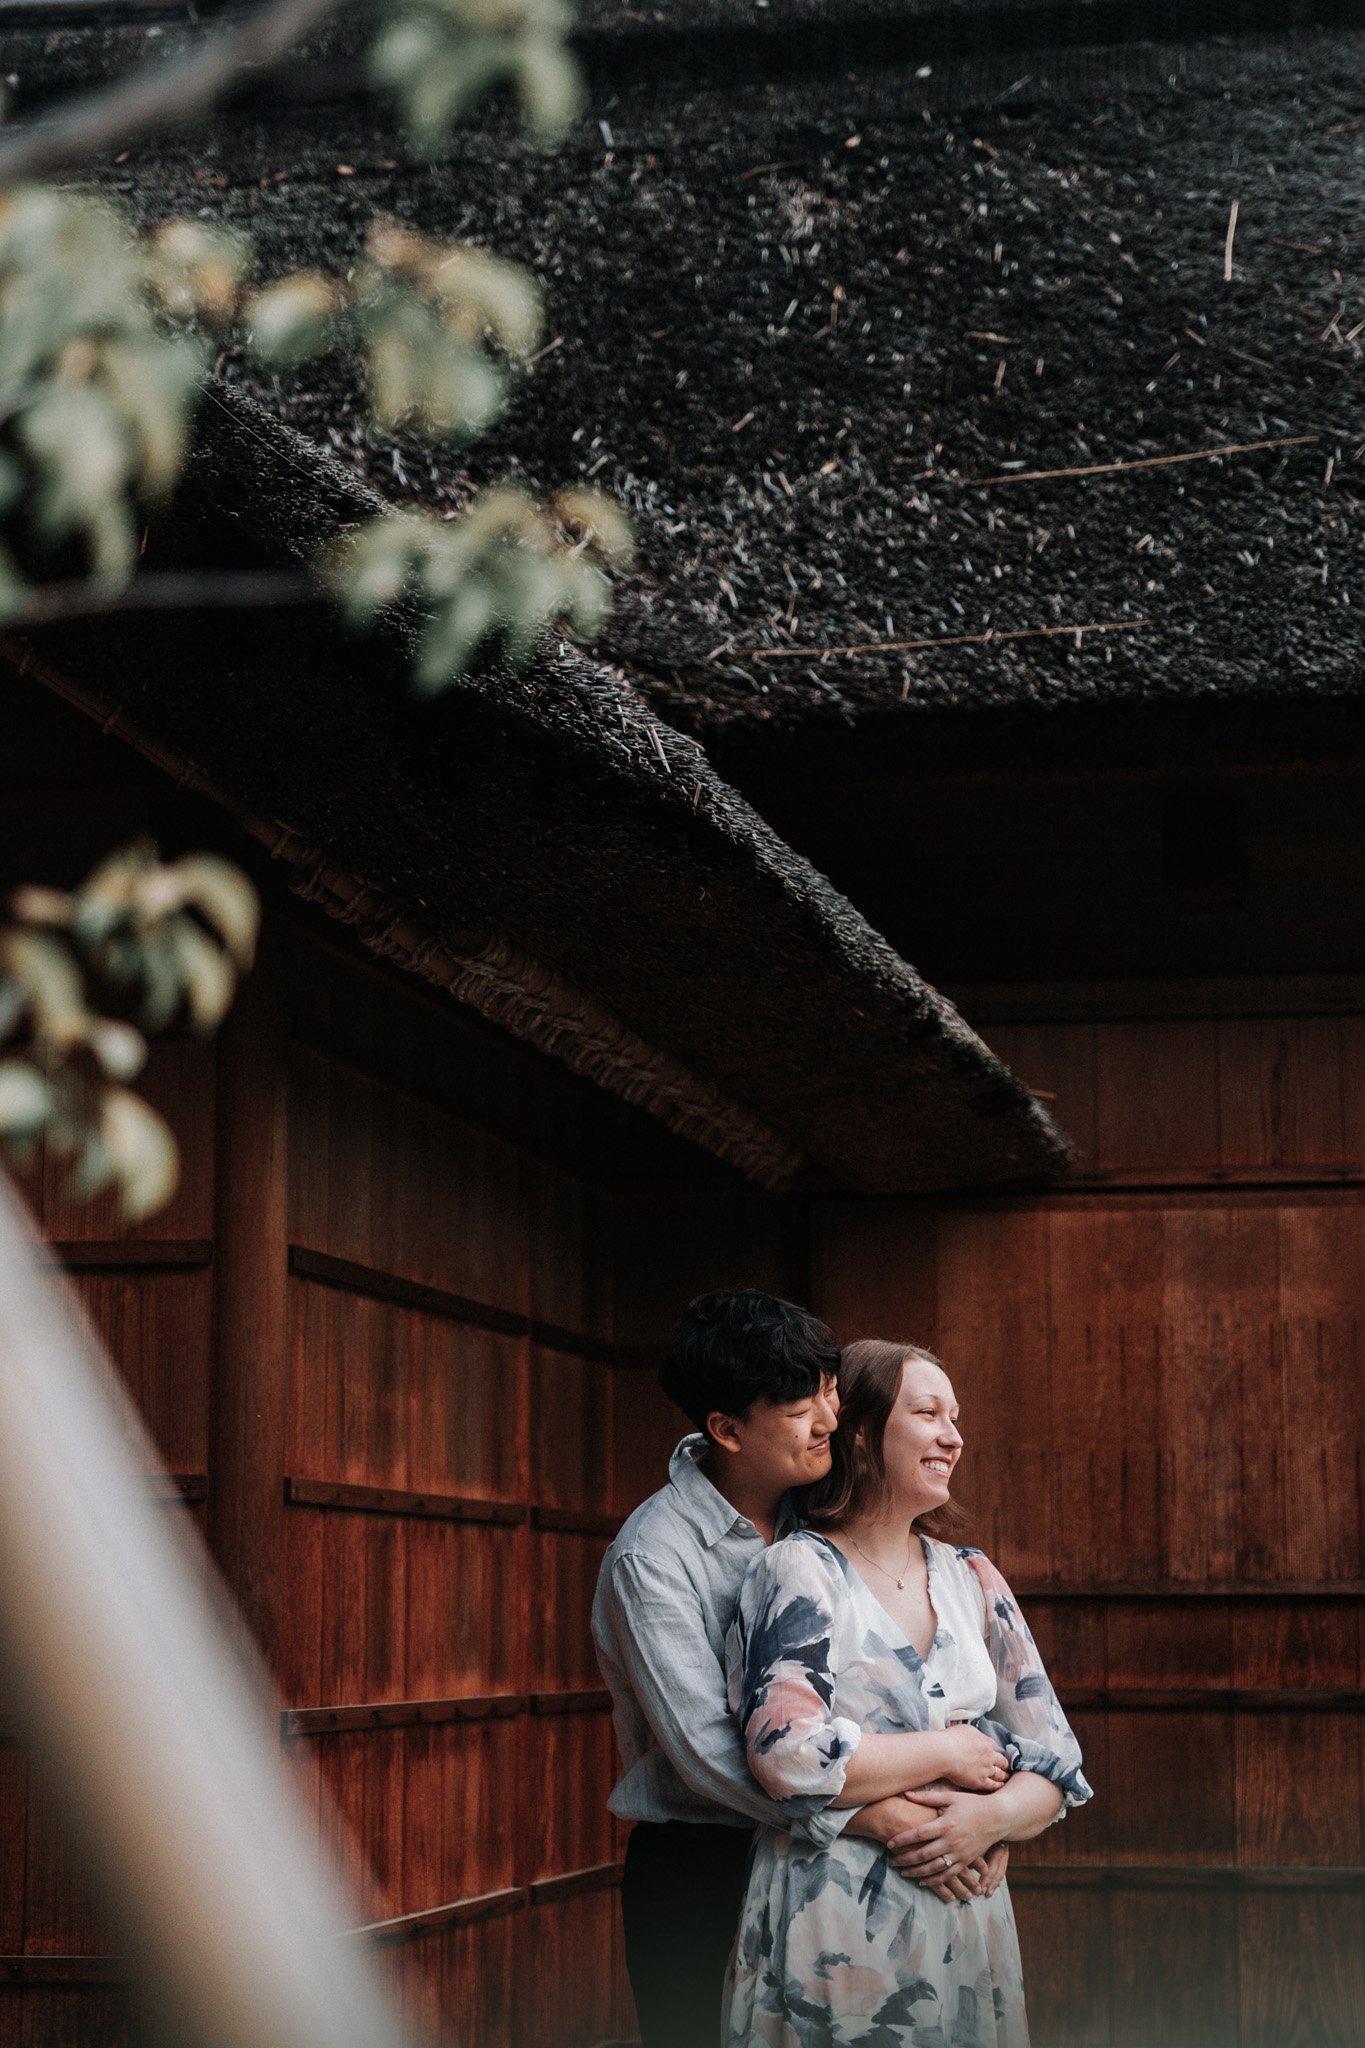 Tokyo engagement photoshoot at Japanese garden